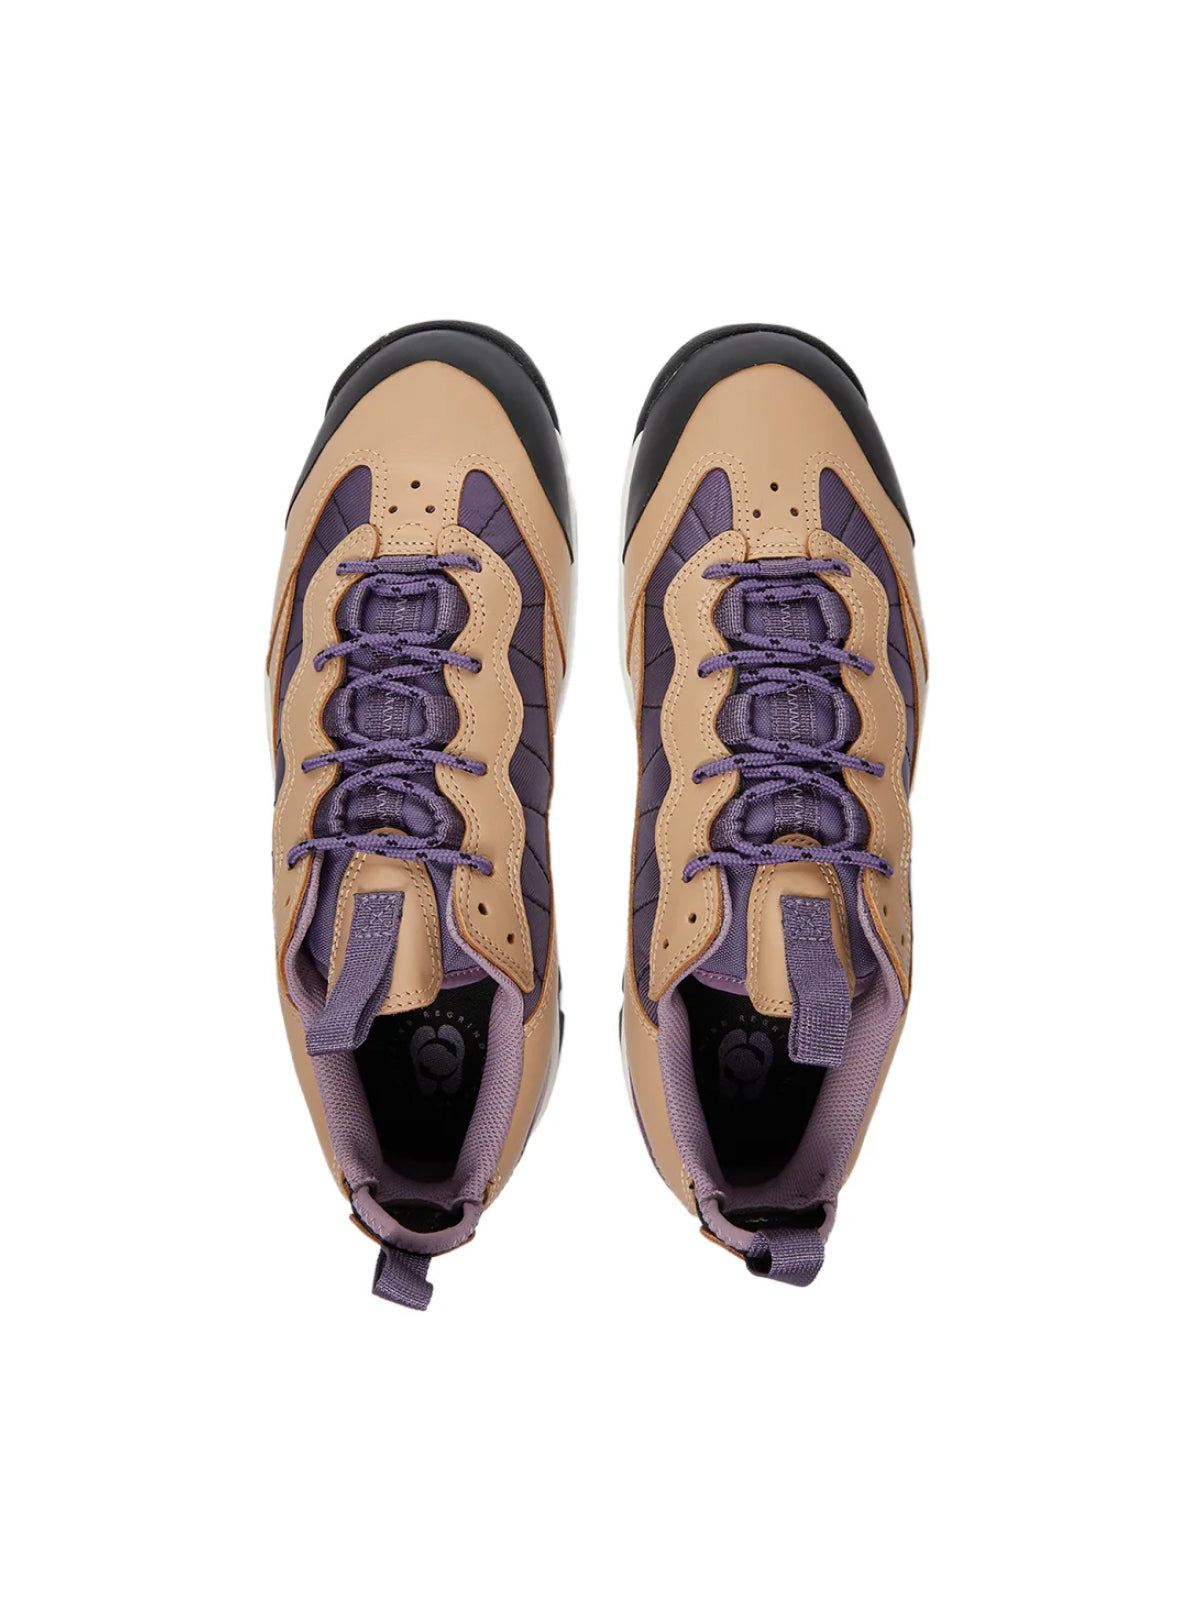 Nike-OUTLET-SALE-ACG Air Mada Hemp Sneakers-ARCHIVIST